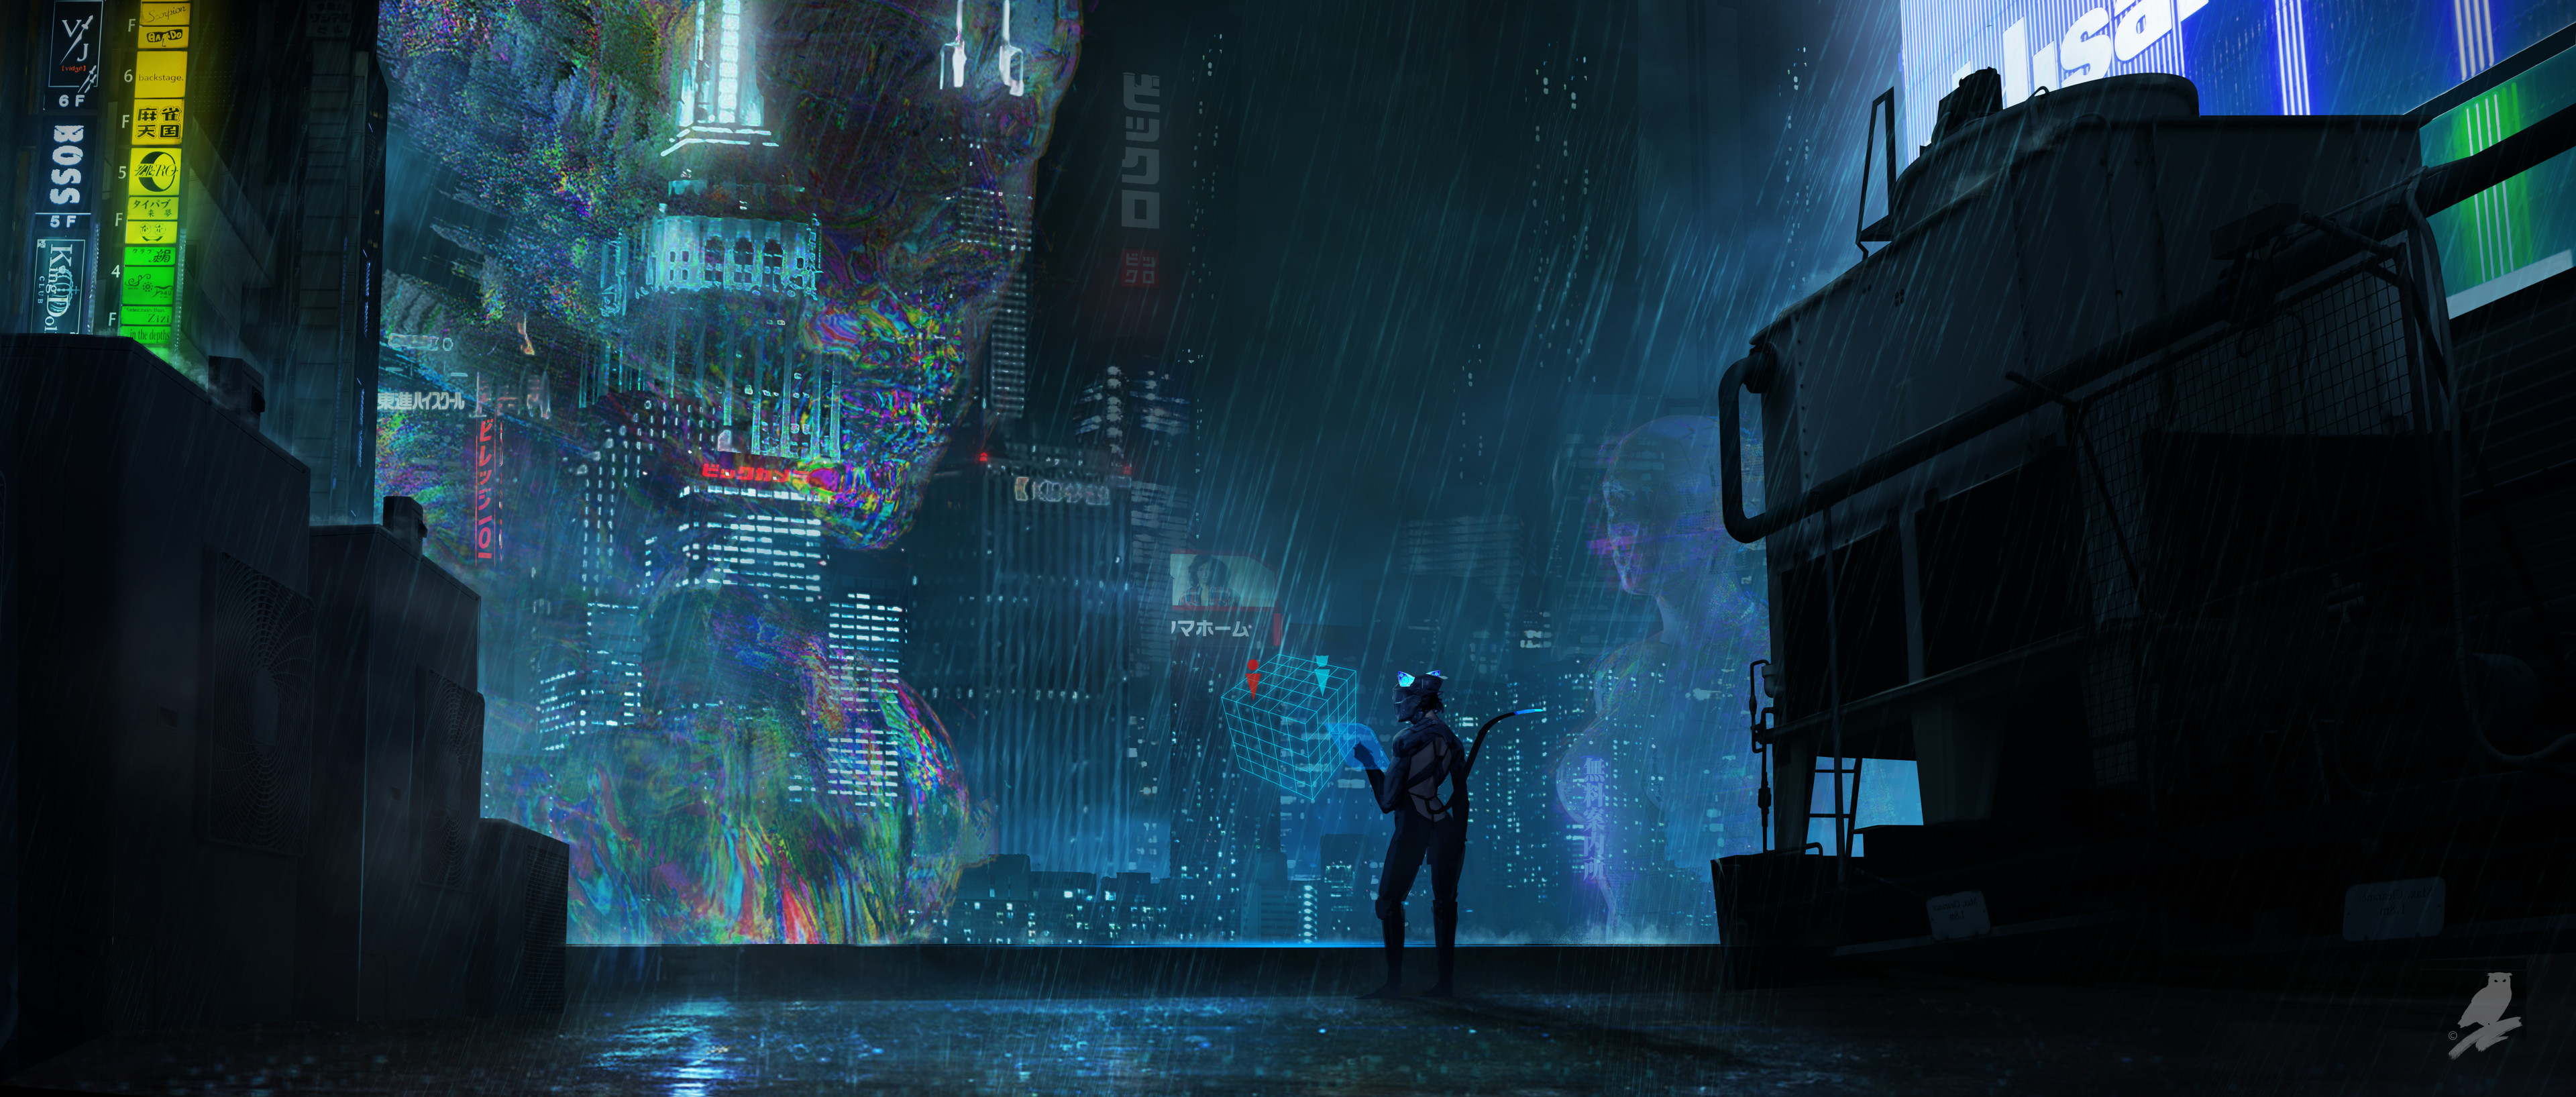 Strigiformes Cyberpunk Dystopian Futuristic City Digital Art Artwork 3840x1635